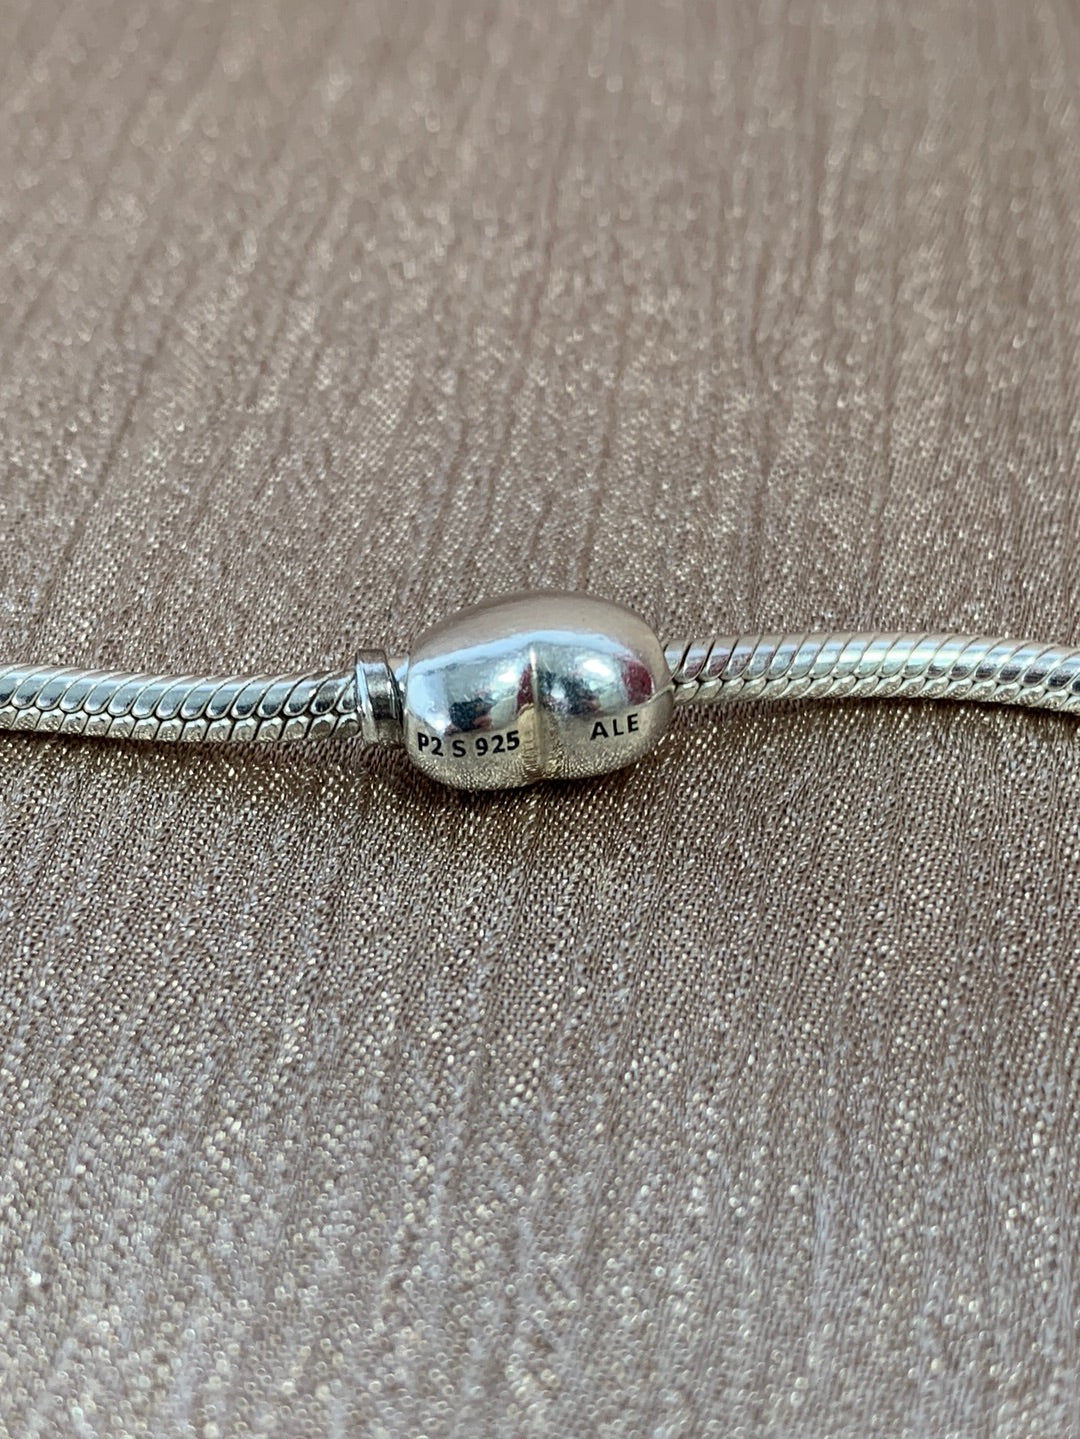 PANDORA 925 Sterling Silver 3 Charm Barrel Clasp Snake Chain Bracelet - 7.5"